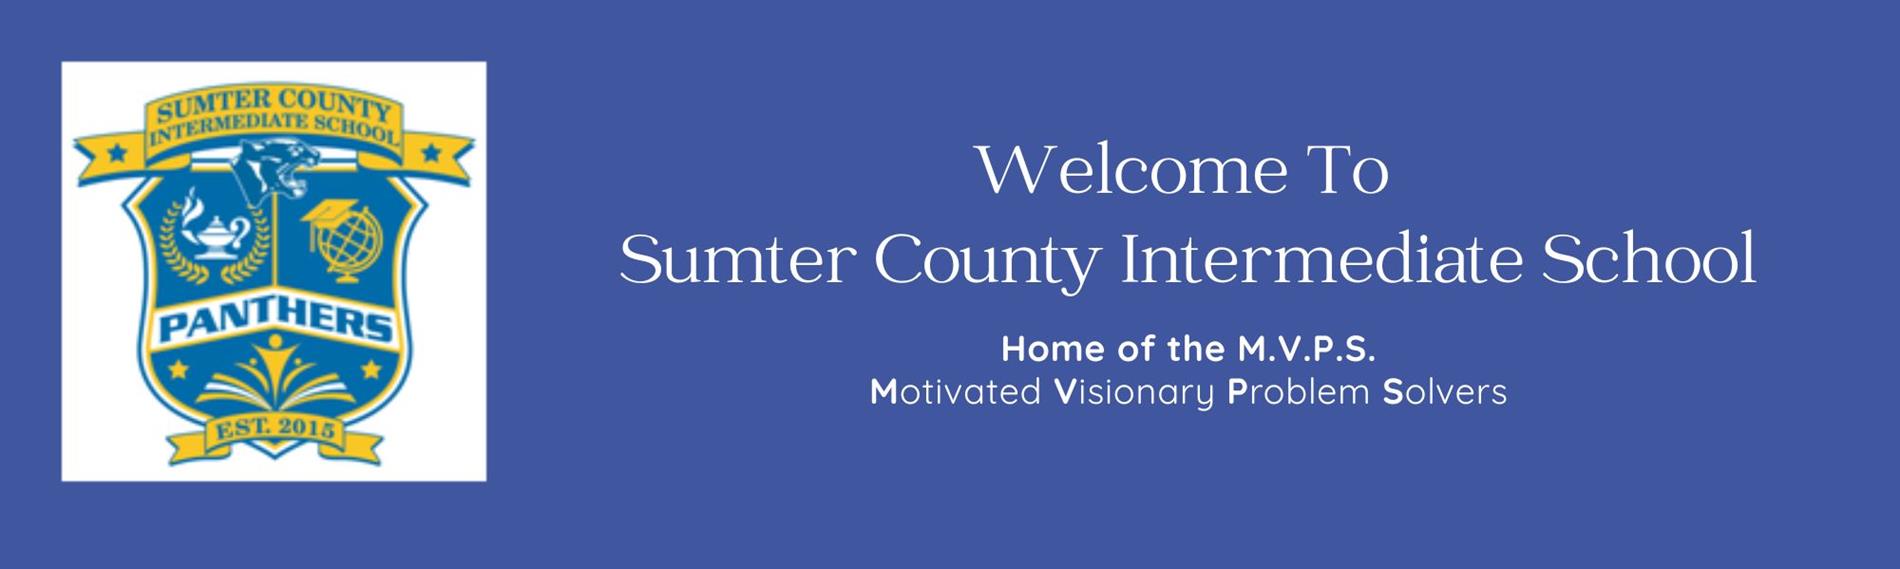 Welcome To Sumter County Intermediate School